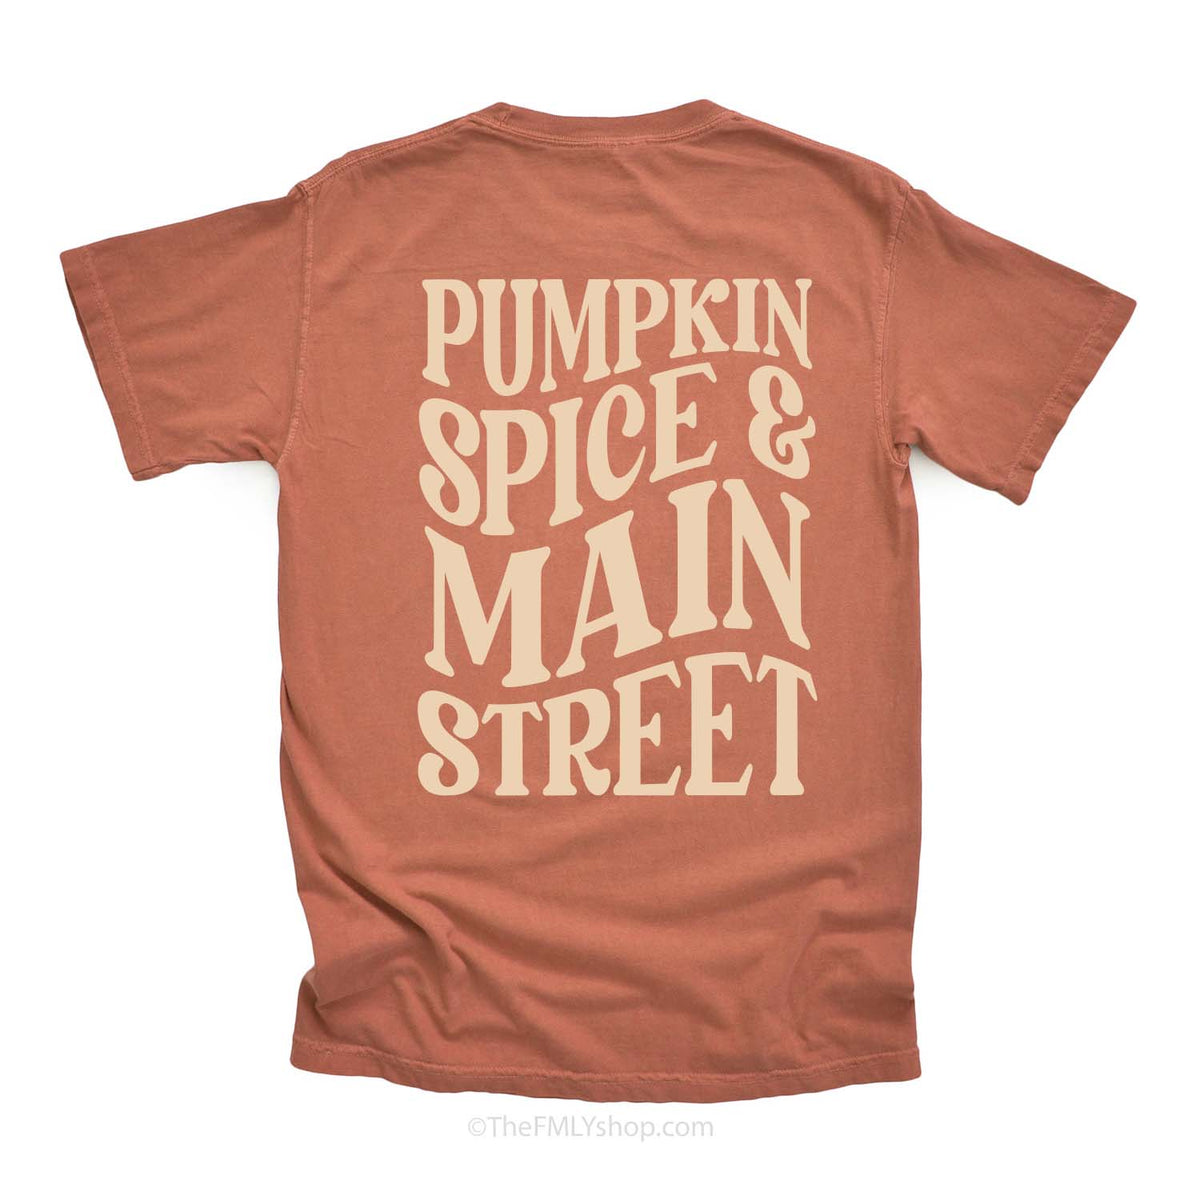 Pumpkin Spice and Main Street Tee